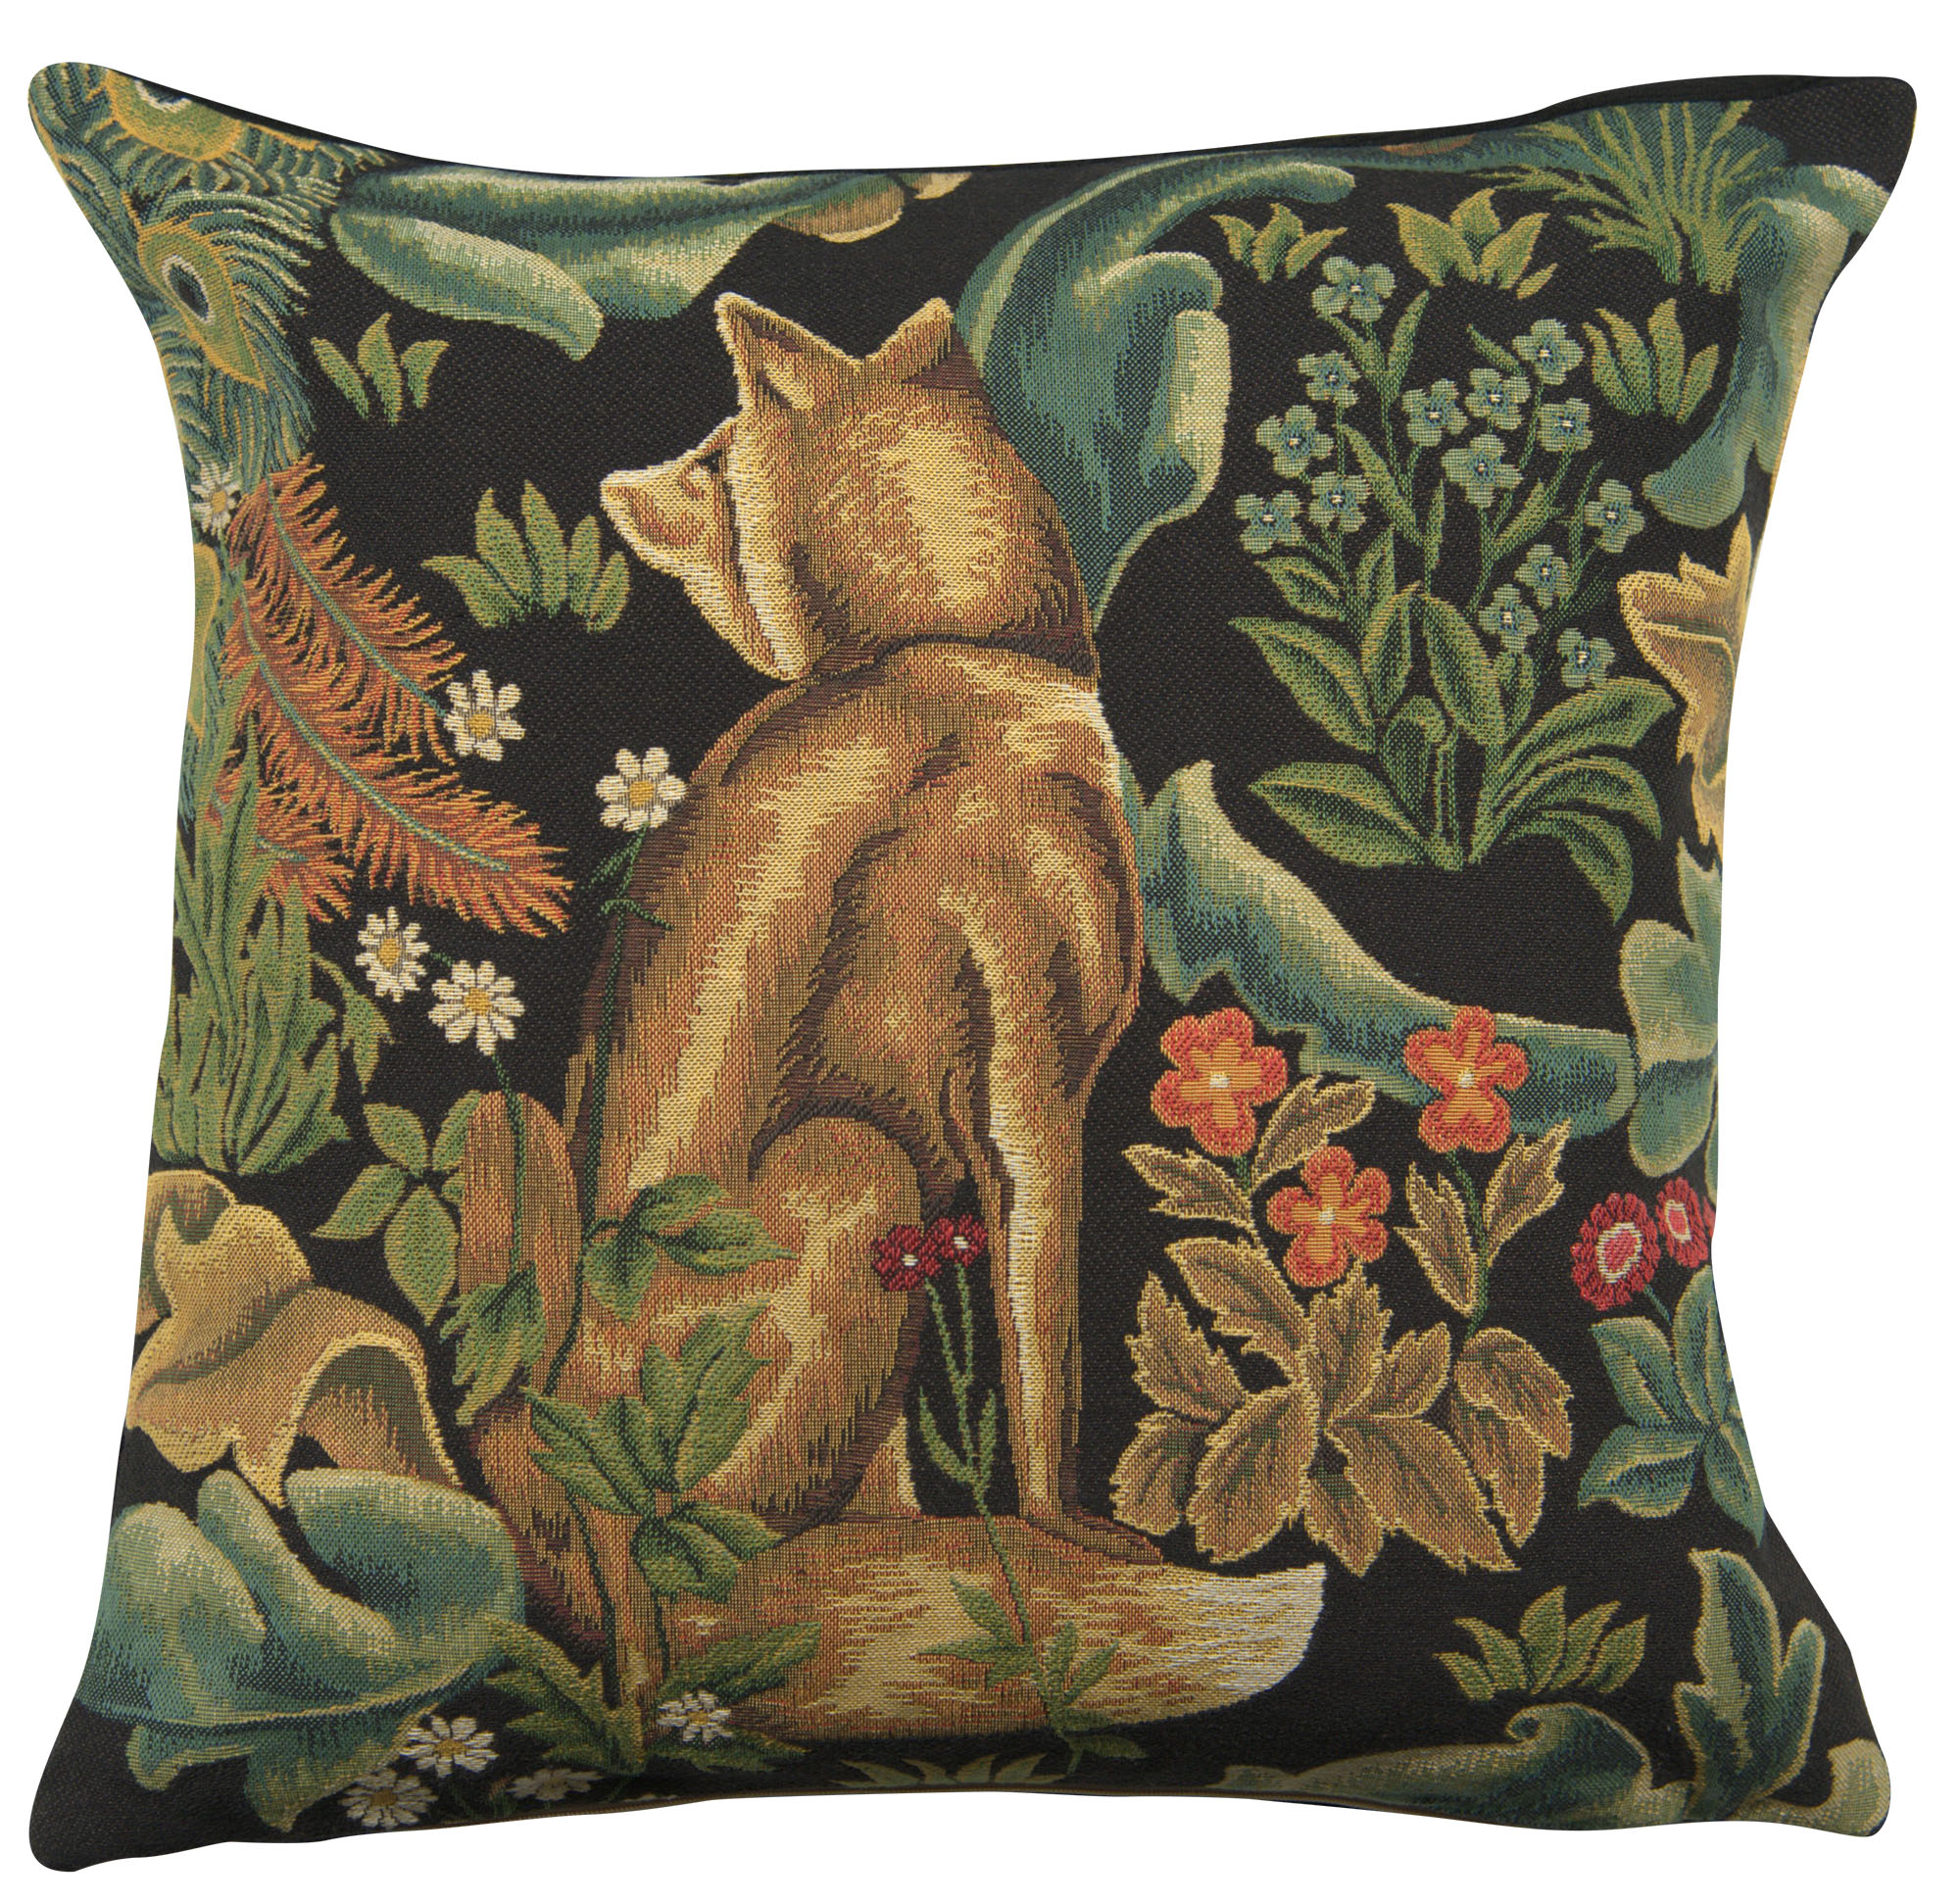 Wolf by William Morris European Throw Cushion Cover Home Decor Pillow 18x18 in